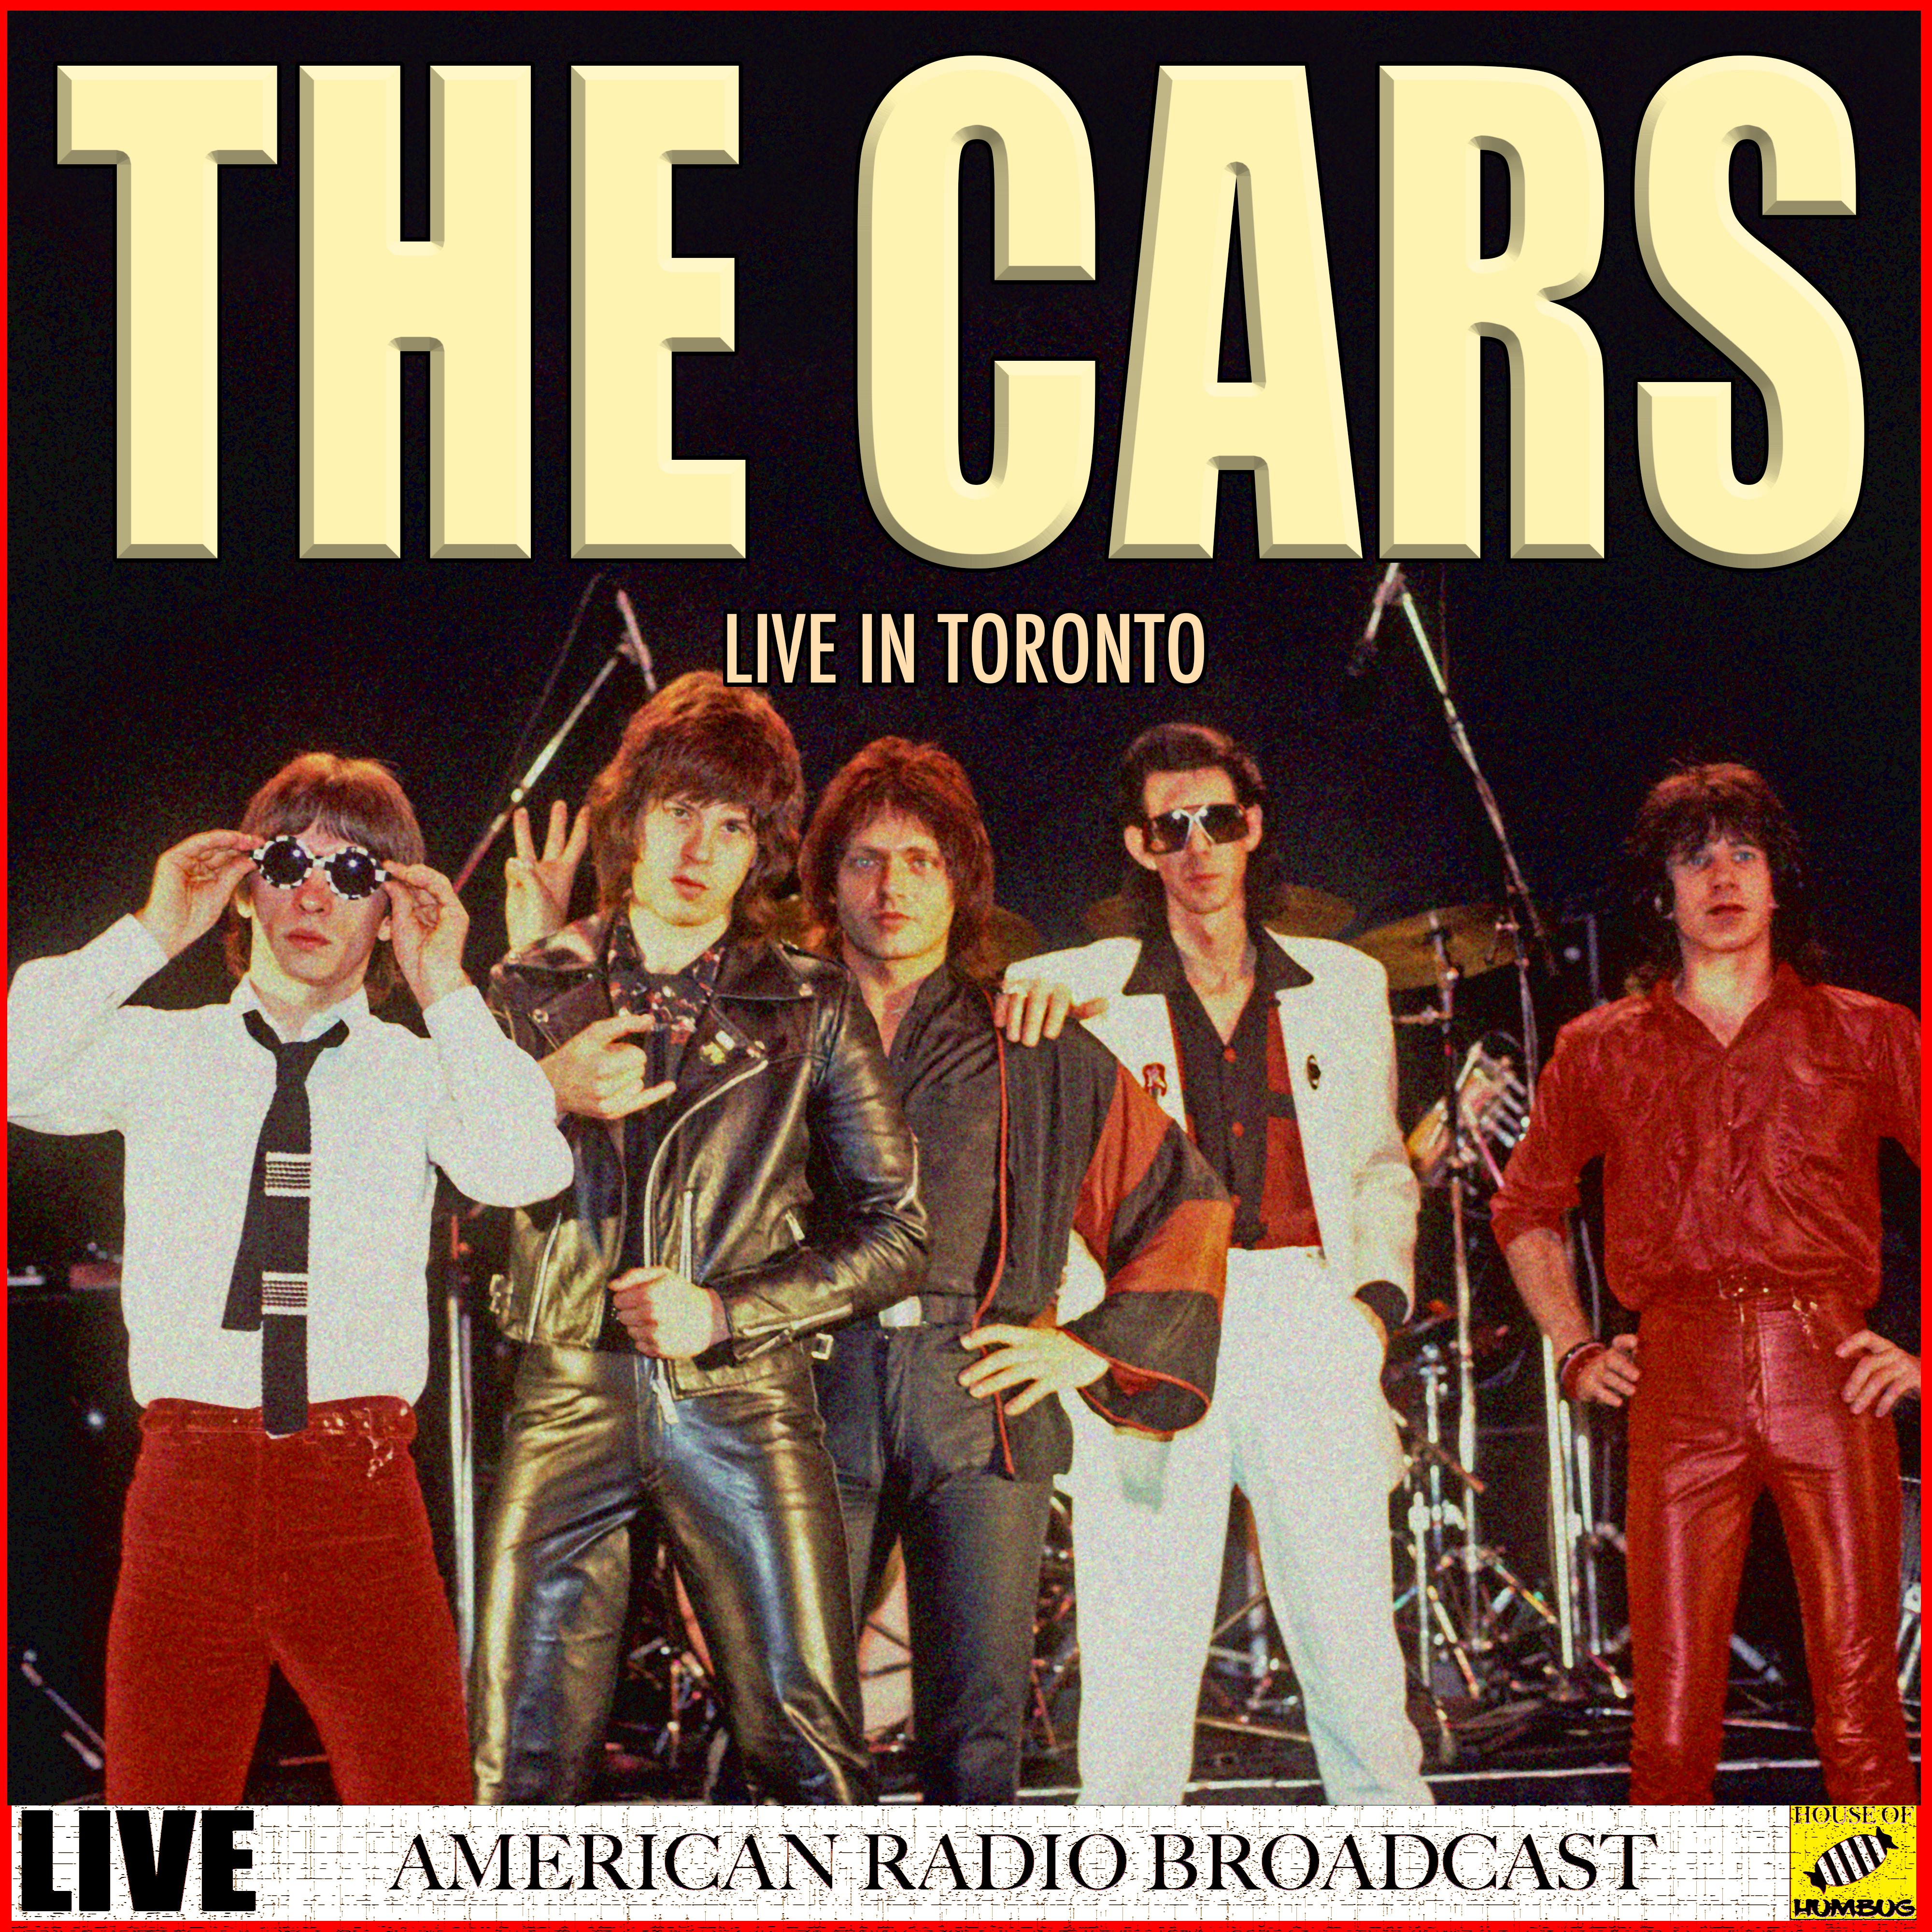 Cars drive песни. Группа the cars 1984. Car. The cars альбом. The cars группа дискография.